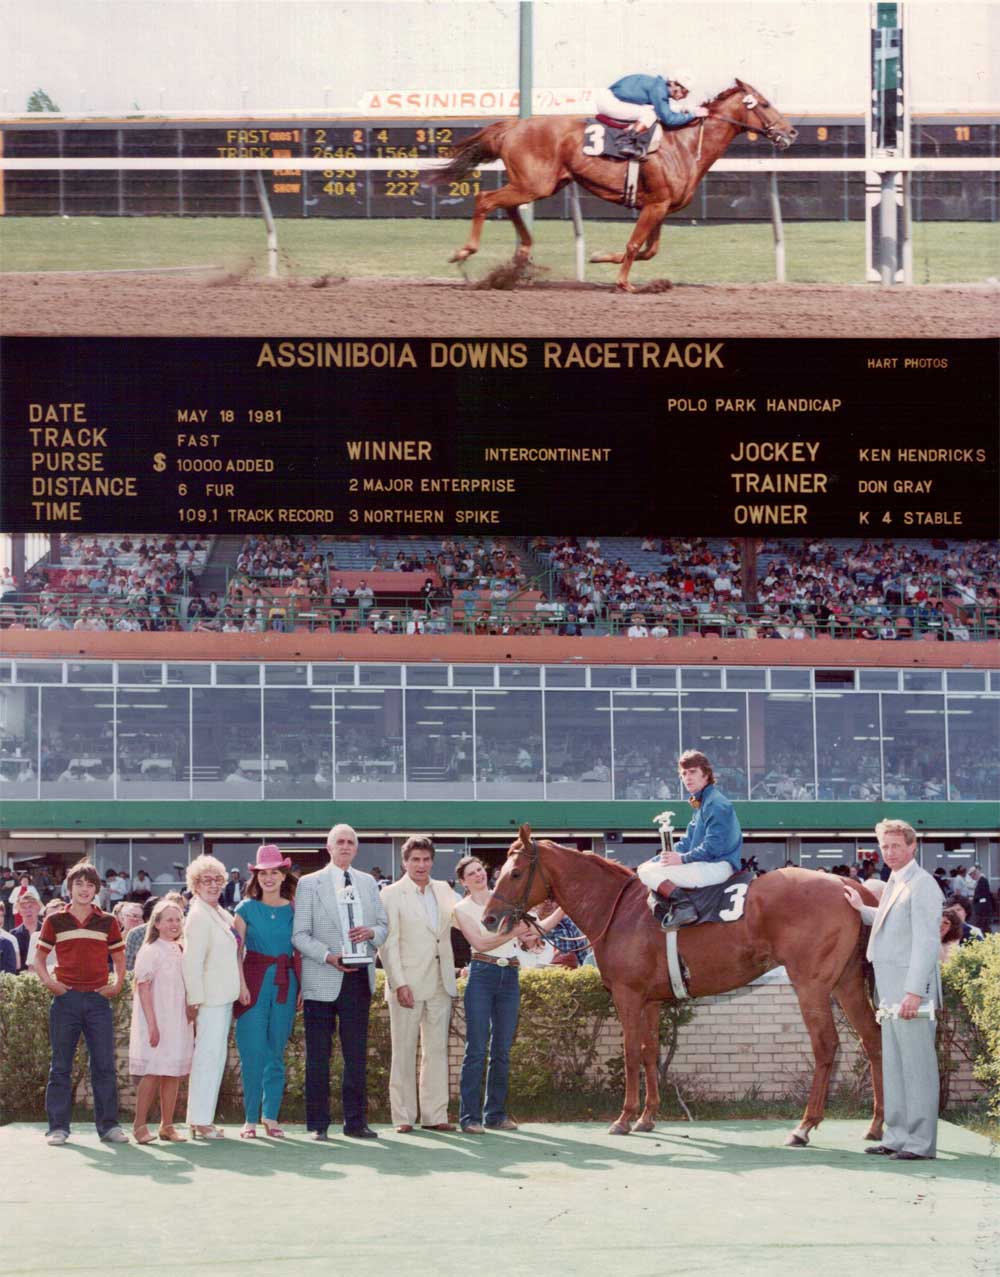 Intercontinent sets new six-furlong track record at ASD in Polo Park Handicap. May 18, 1981.